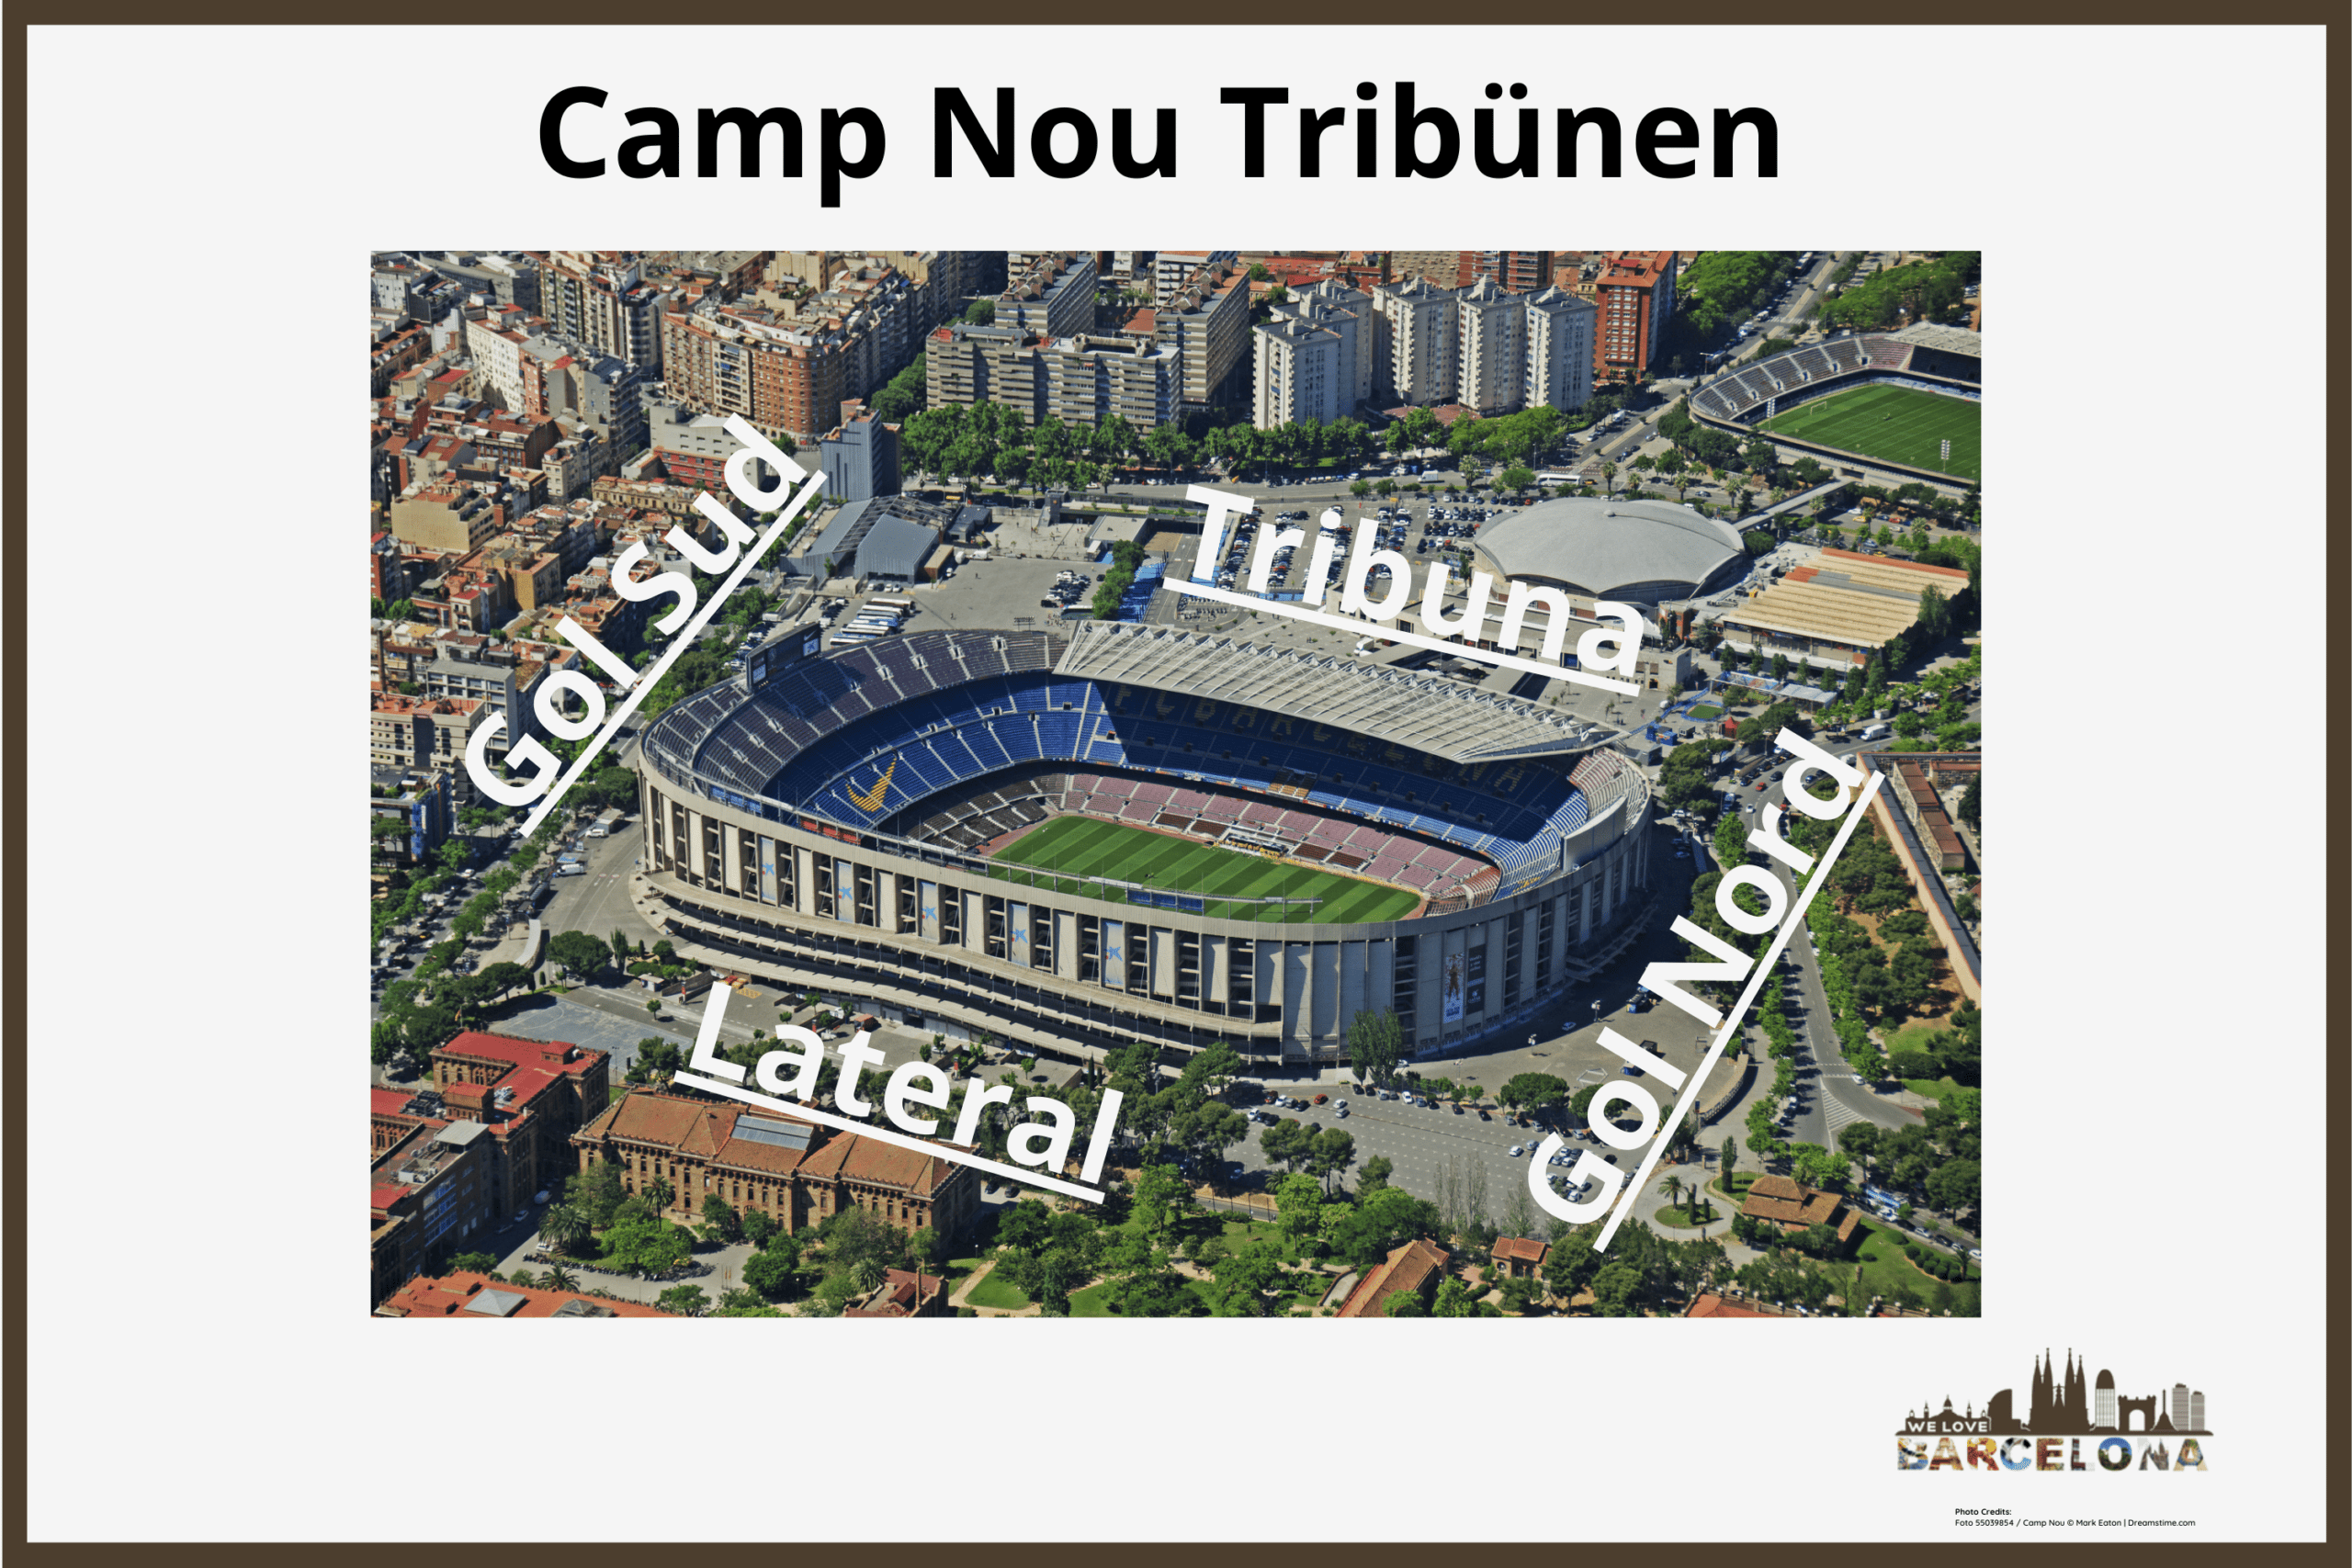 Camp Nou Tribünen, Tribuna, Lateral, Gold Nord und Gol Sud Nike